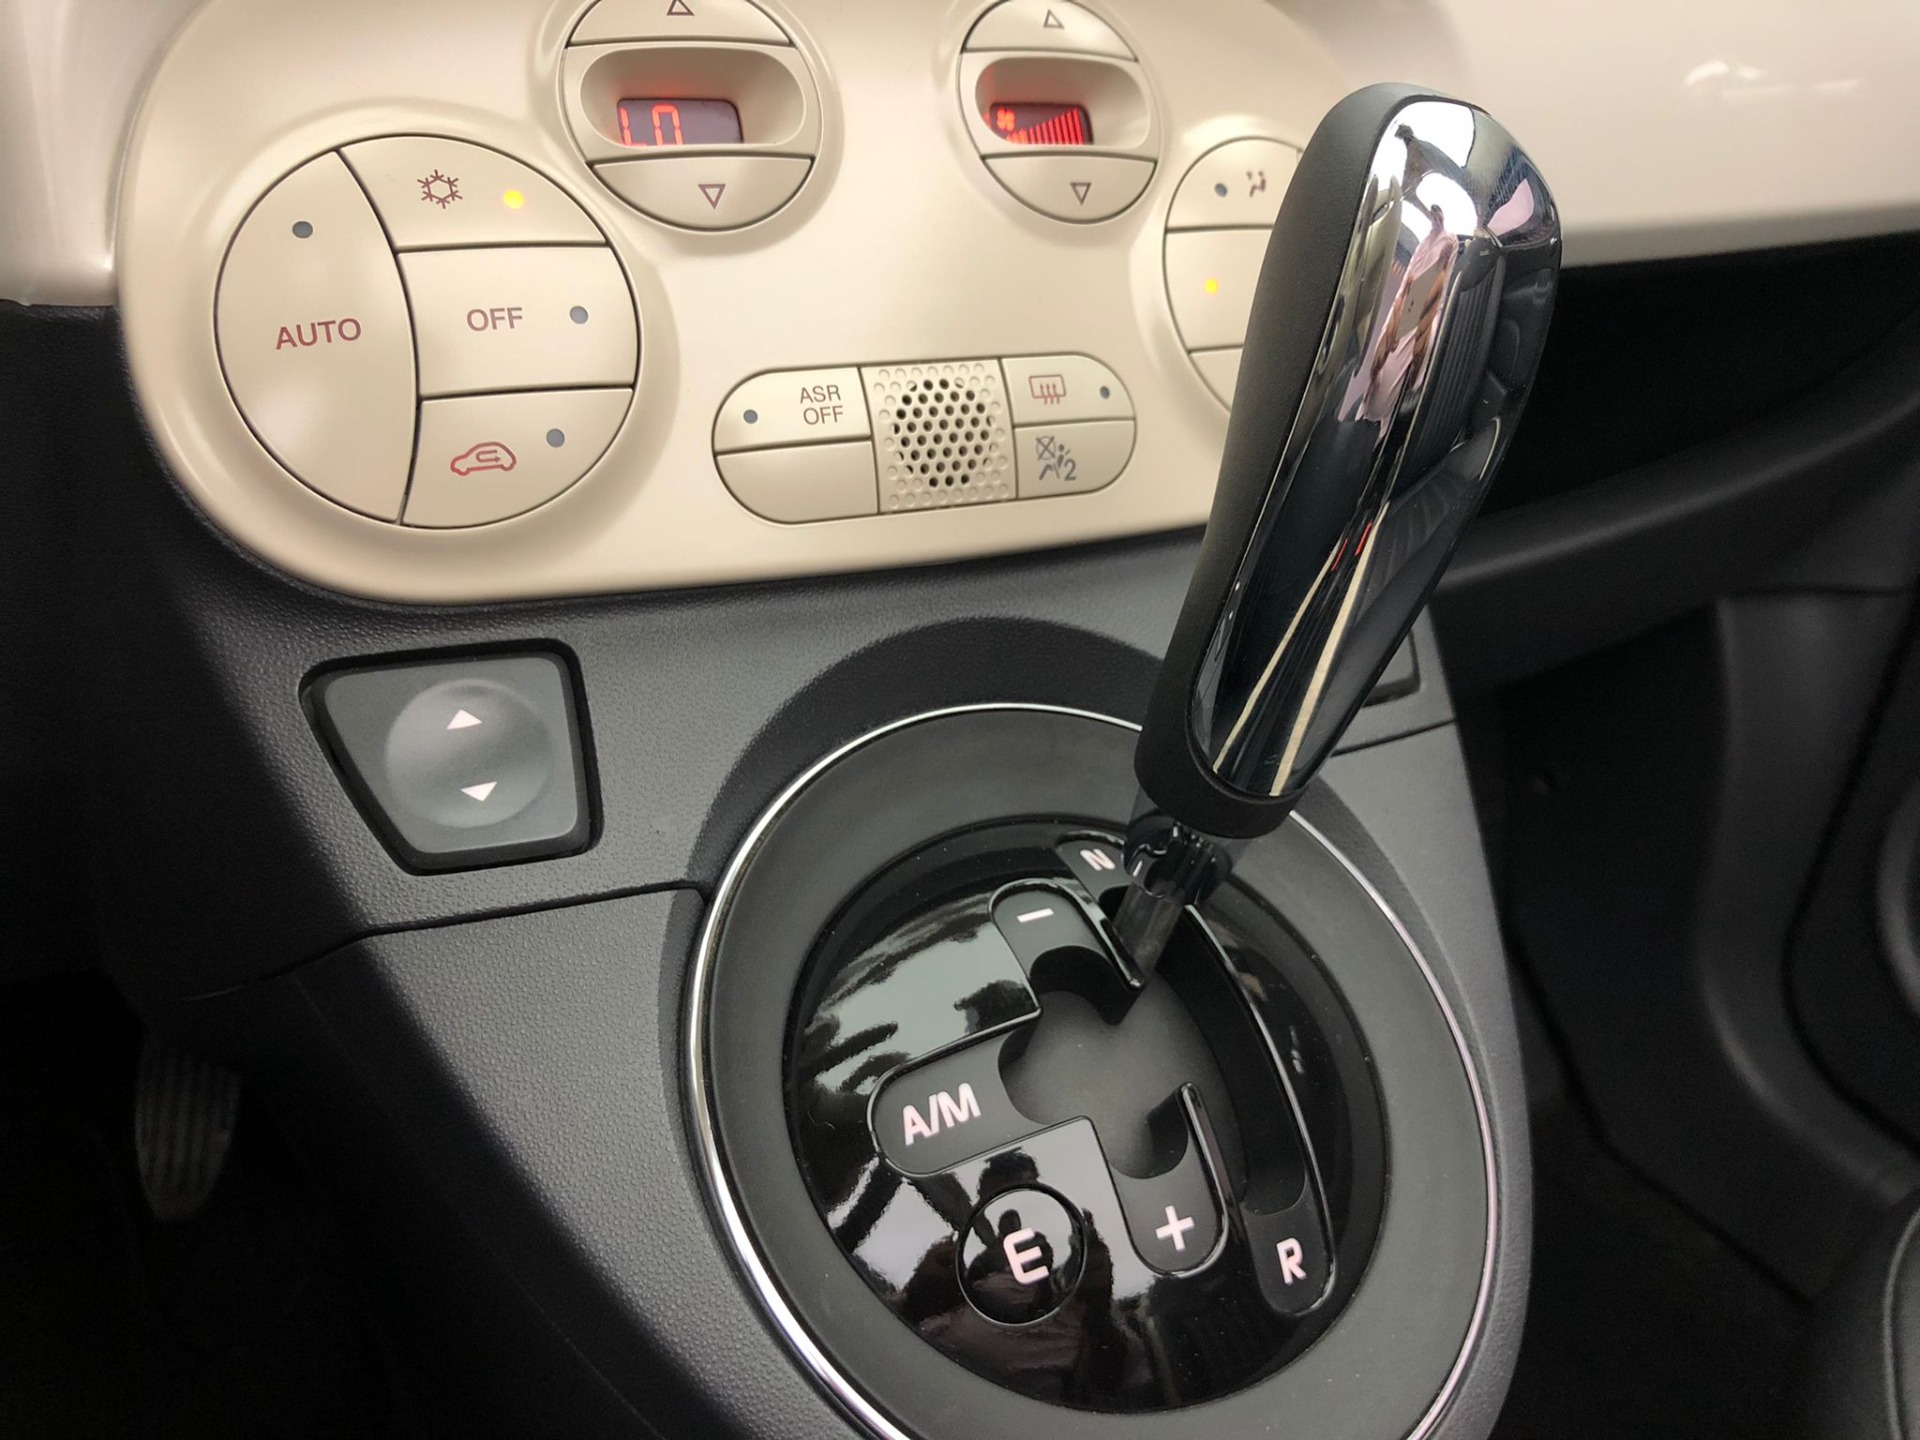 2015 51Bin Km'de Otomatik Cabrio Fıat 500 Cult-19